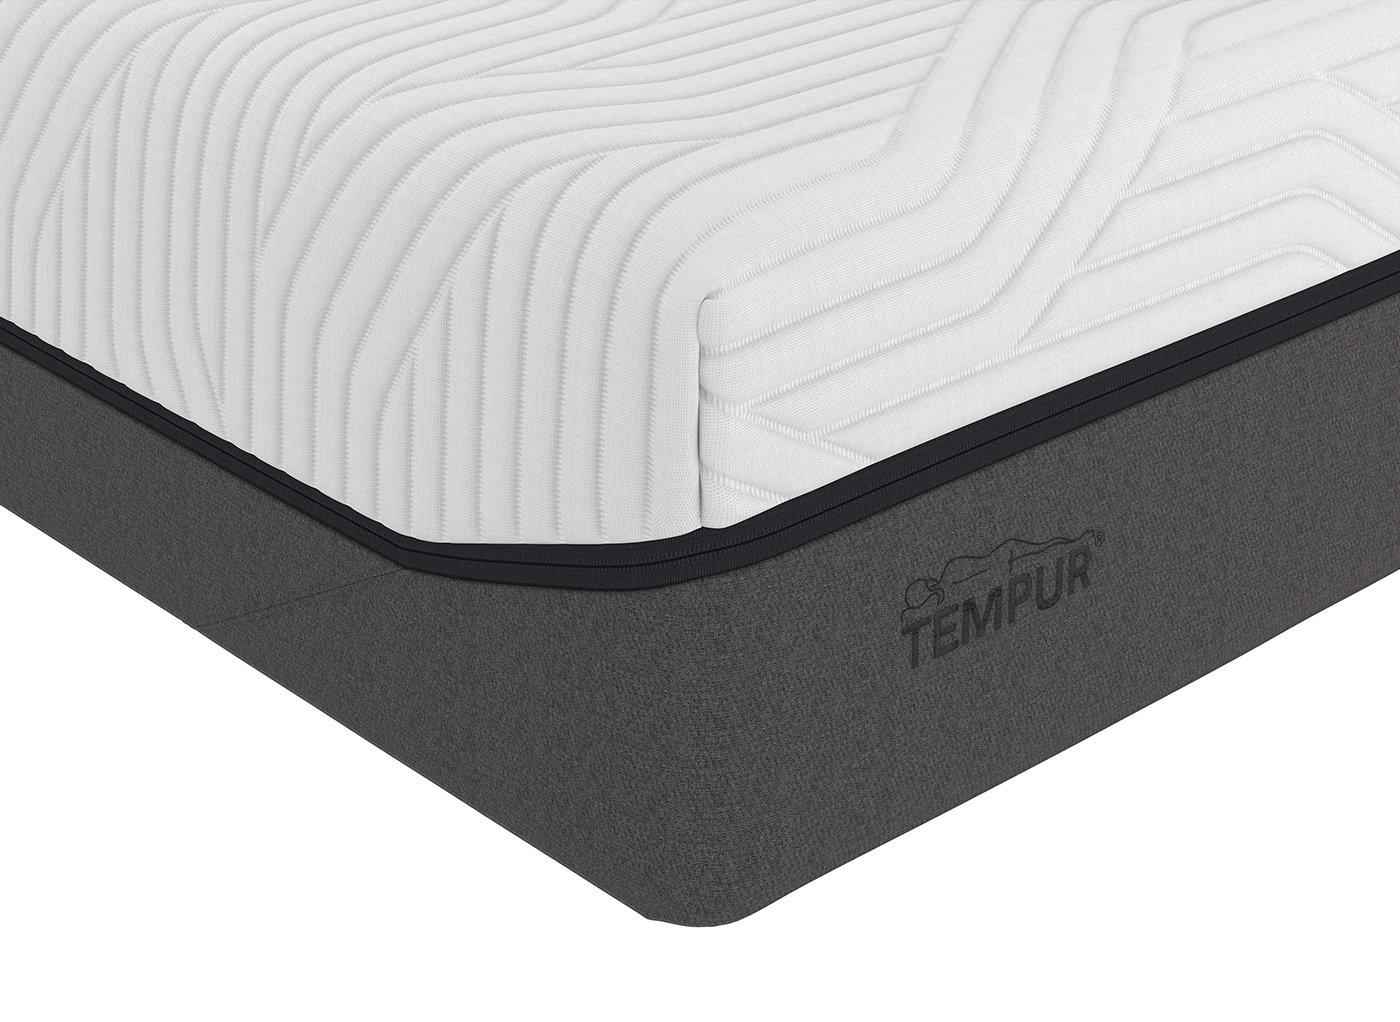 tempur cooltouch contour supreme mattress firm